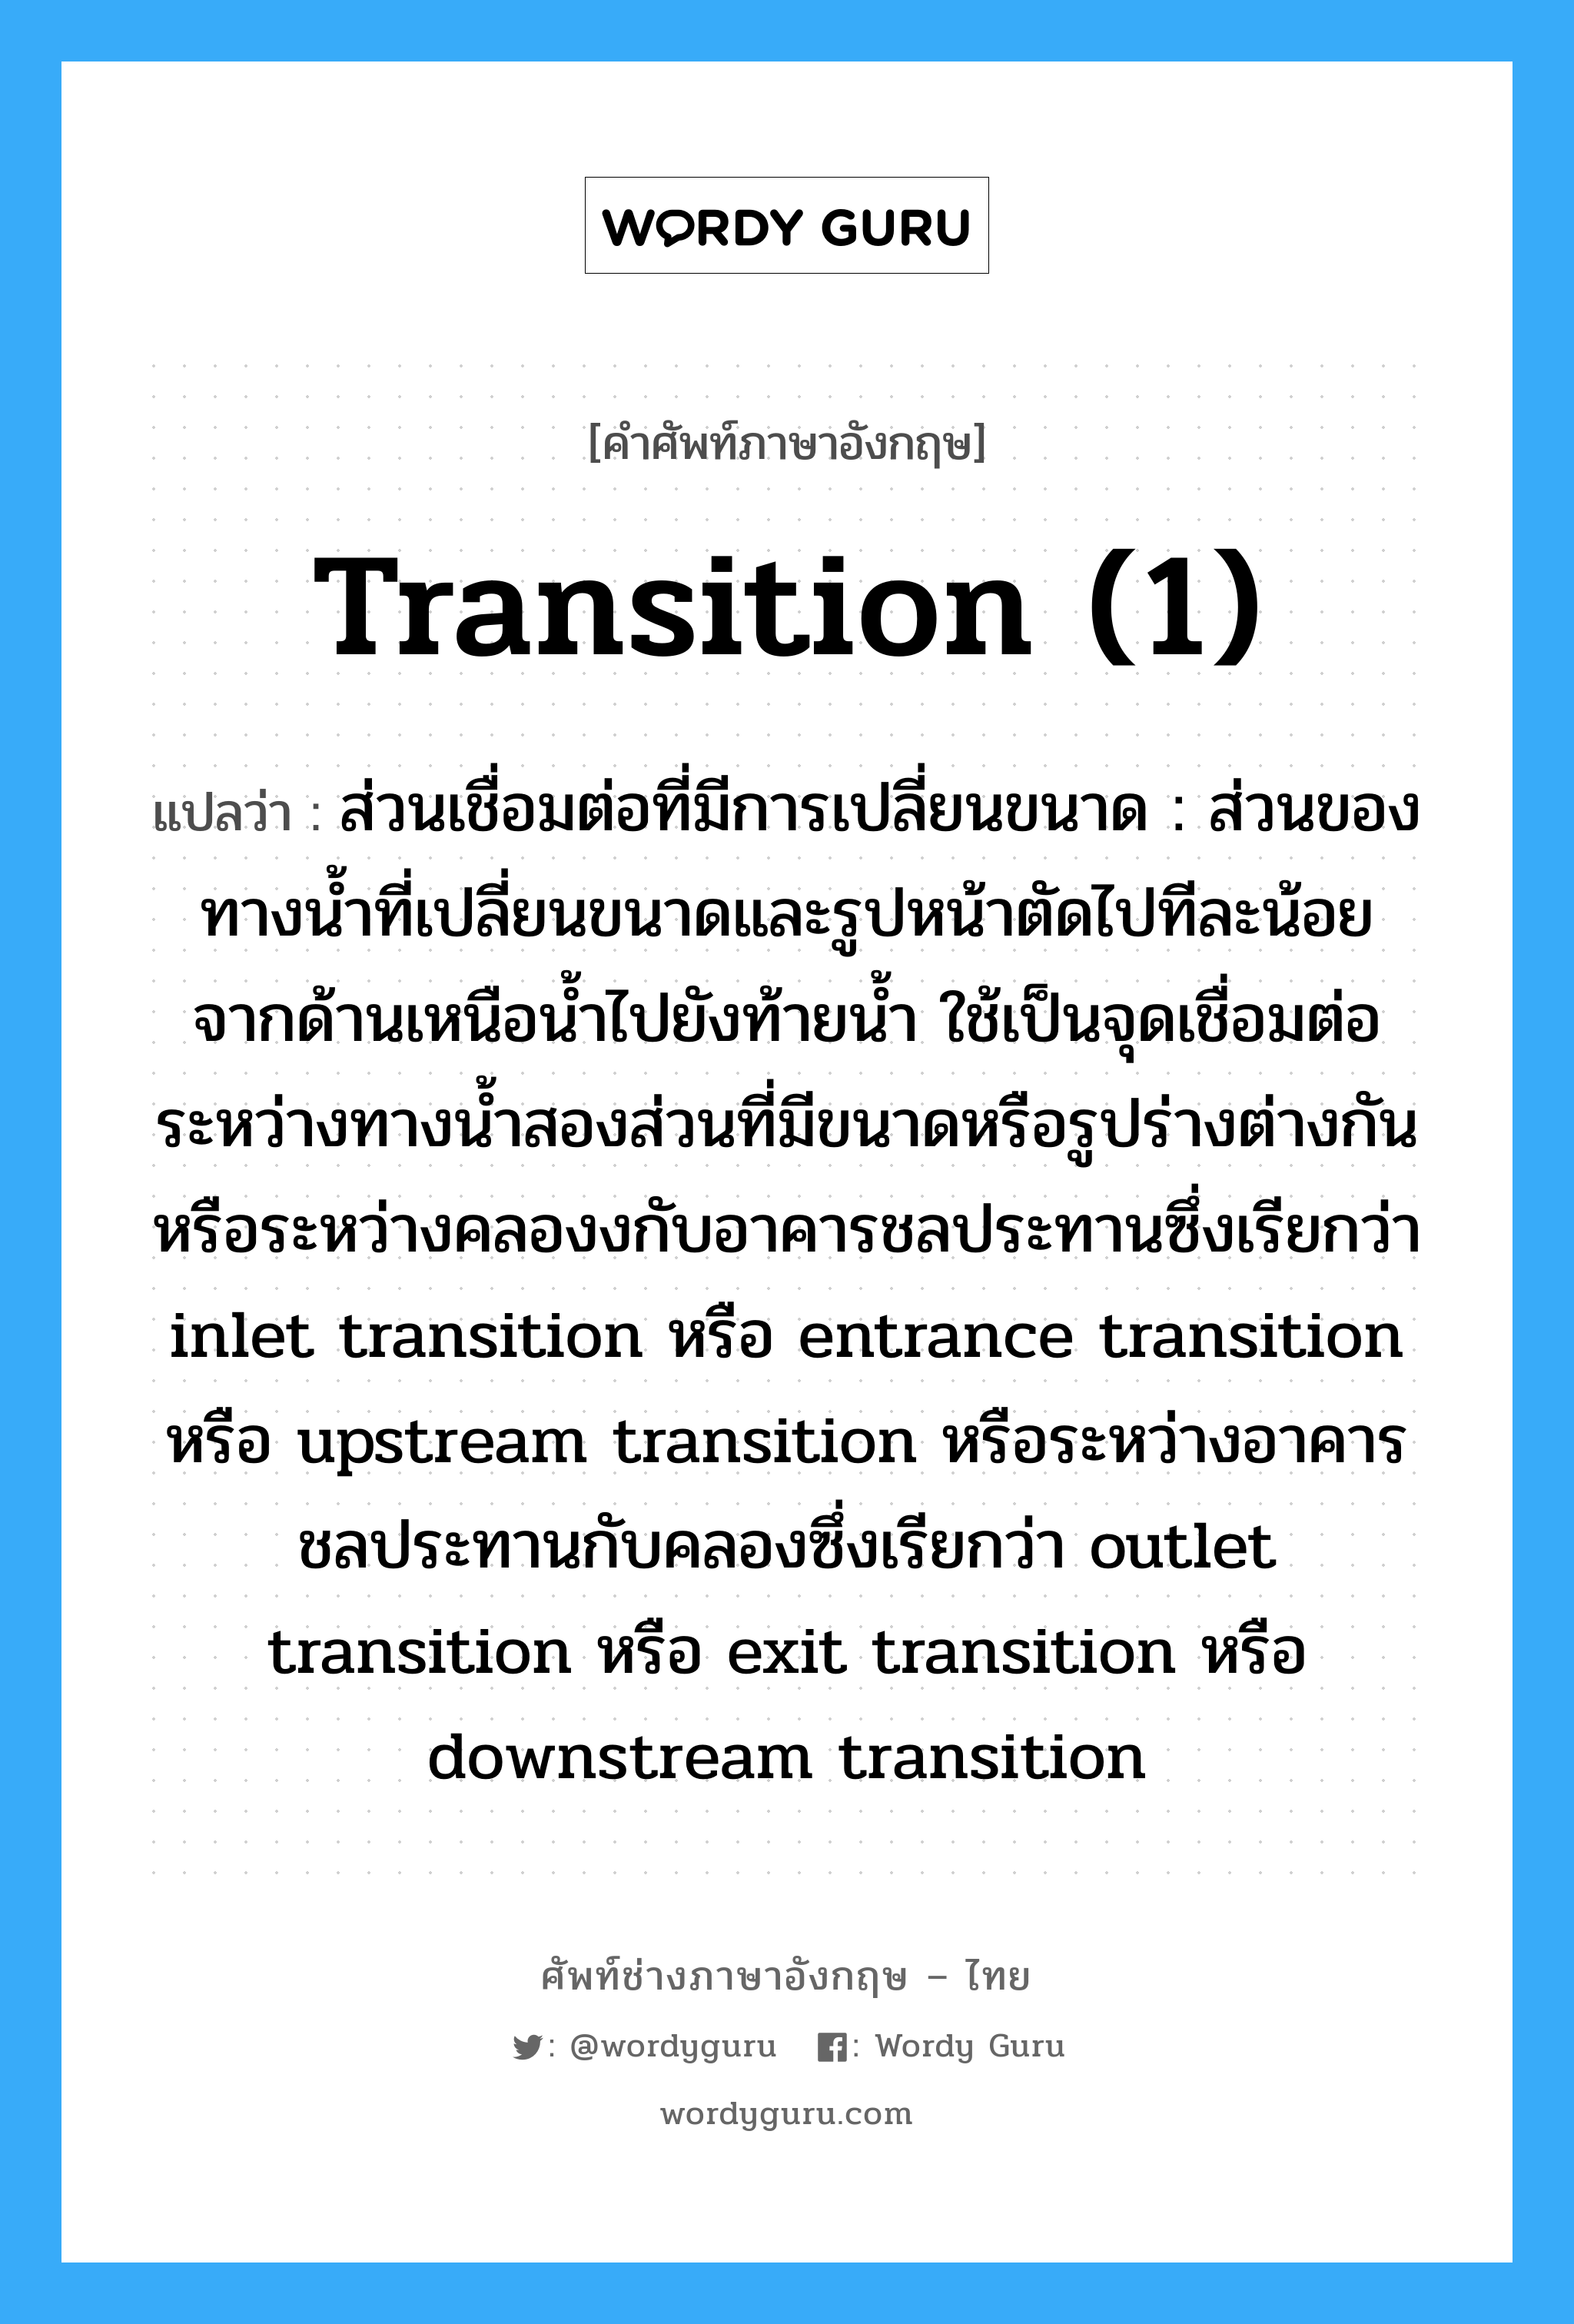 transition (1) แปลว่า?, คำศัพท์ช่างภาษาอังกฤษ - ไทย transition (1) คำศัพท์ภาษาอังกฤษ transition (1) แปลว่า ส่วนเชื่อมต่อที่มีการเปลี่ยนขนาด : ส่วนของทางน้ำที่เปลี่ยนขนาดและรูปหน้าตัดไปทีละน้อย จากด้านเหนือน้ำไปยังท้ายน้ำ ใช้เป็นจุดเชื่อมต่อระหว่างทางน้ำสองส่วนที่มีขนาดหรือรูปร่างต่างกัน หรือระหว่างคลองงกับอาคารชลประทานซึ่งเรียกว่า inlet transition หรือ entrance transition หรือ upstream transition หรือระหว่างอาคารชลประทานกับคลองซึ่งเรียกว่า outlet transition หรือ exit transition หรือ downstream transition